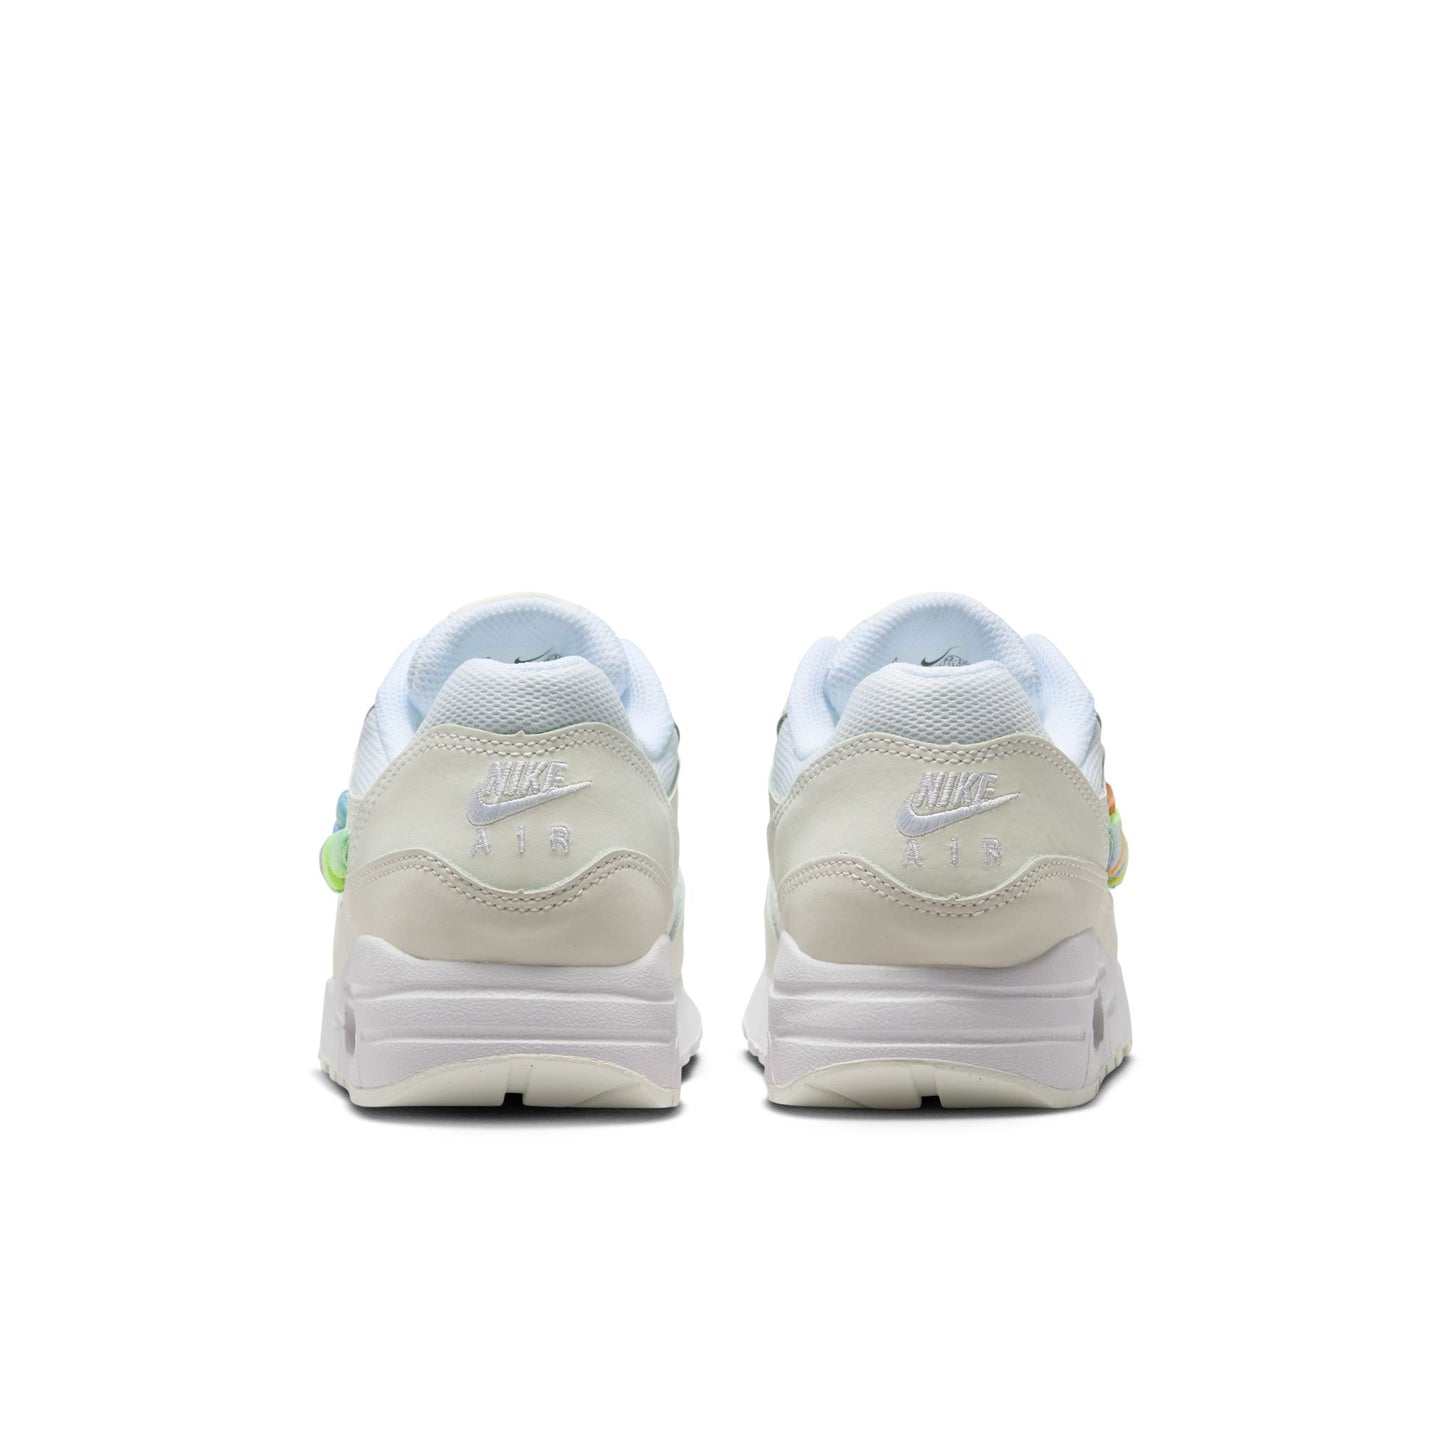 Big Kid's Nike Air Max 1 SE - "White/Multi-Color"